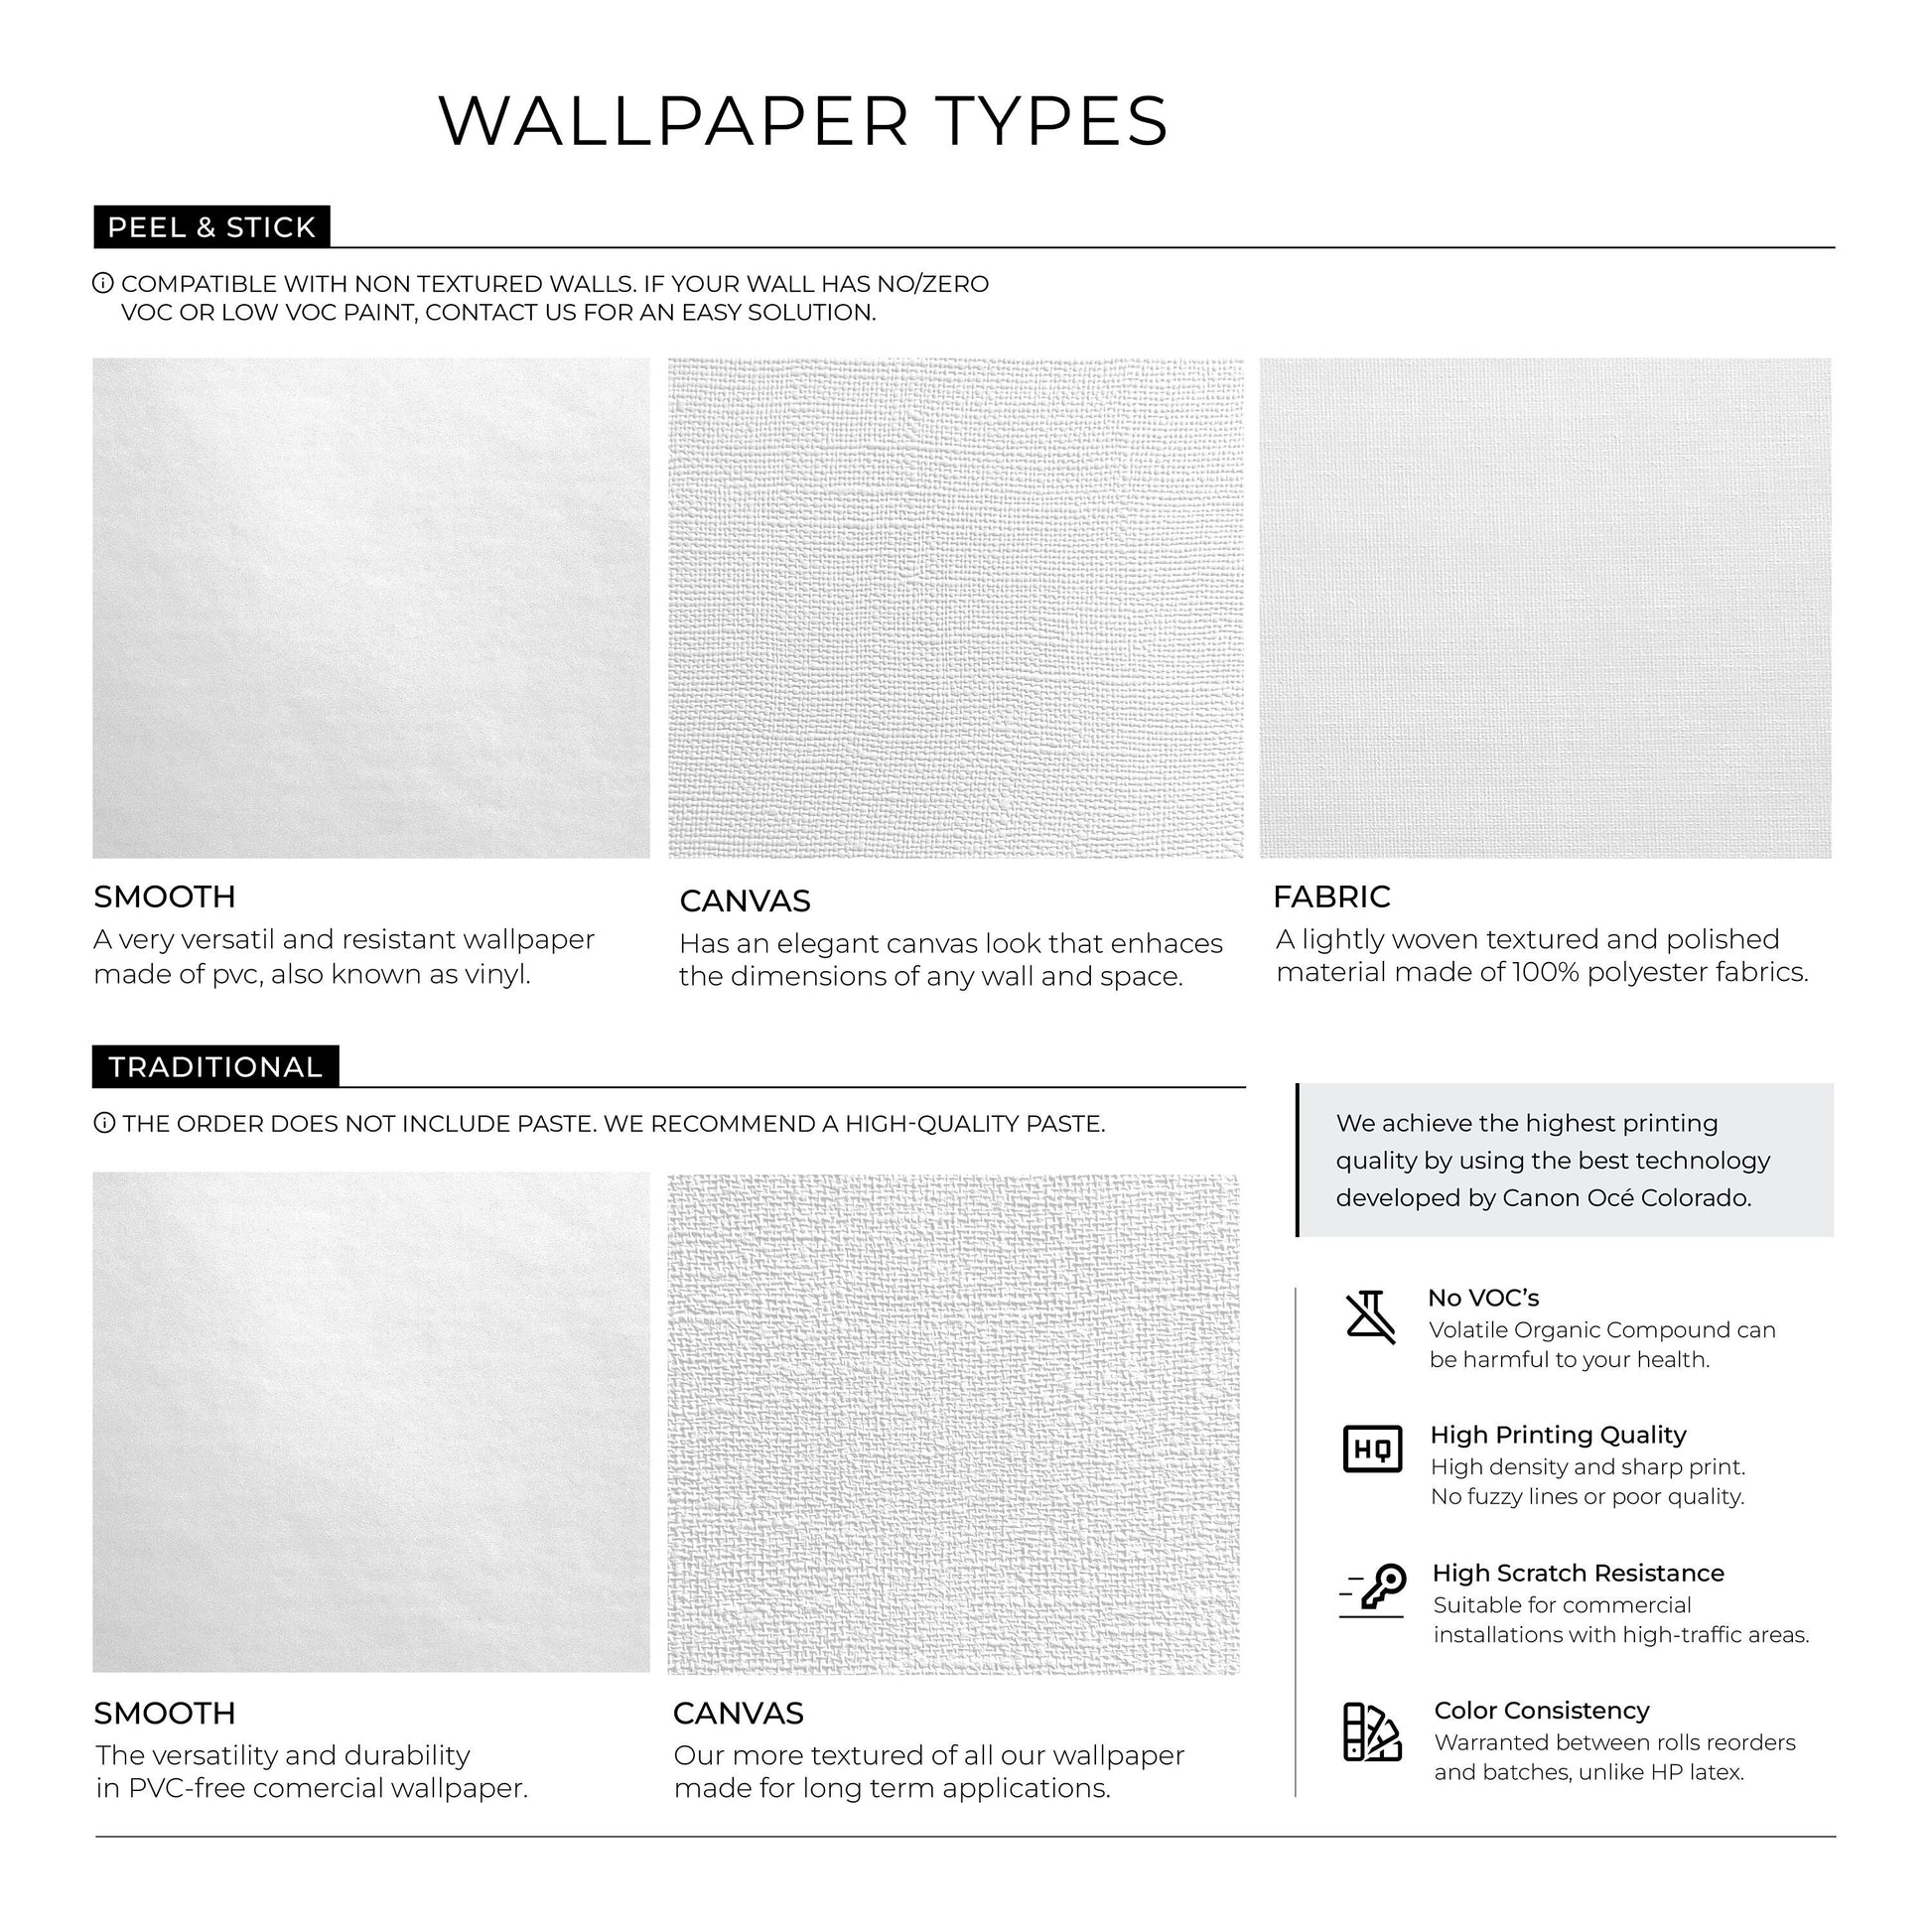 Black and White Retro Wallpaper / Peel and Stick Wallpaper Removable Wallpaper Home Decor Wall Art Wall Decor Room Decor - D008